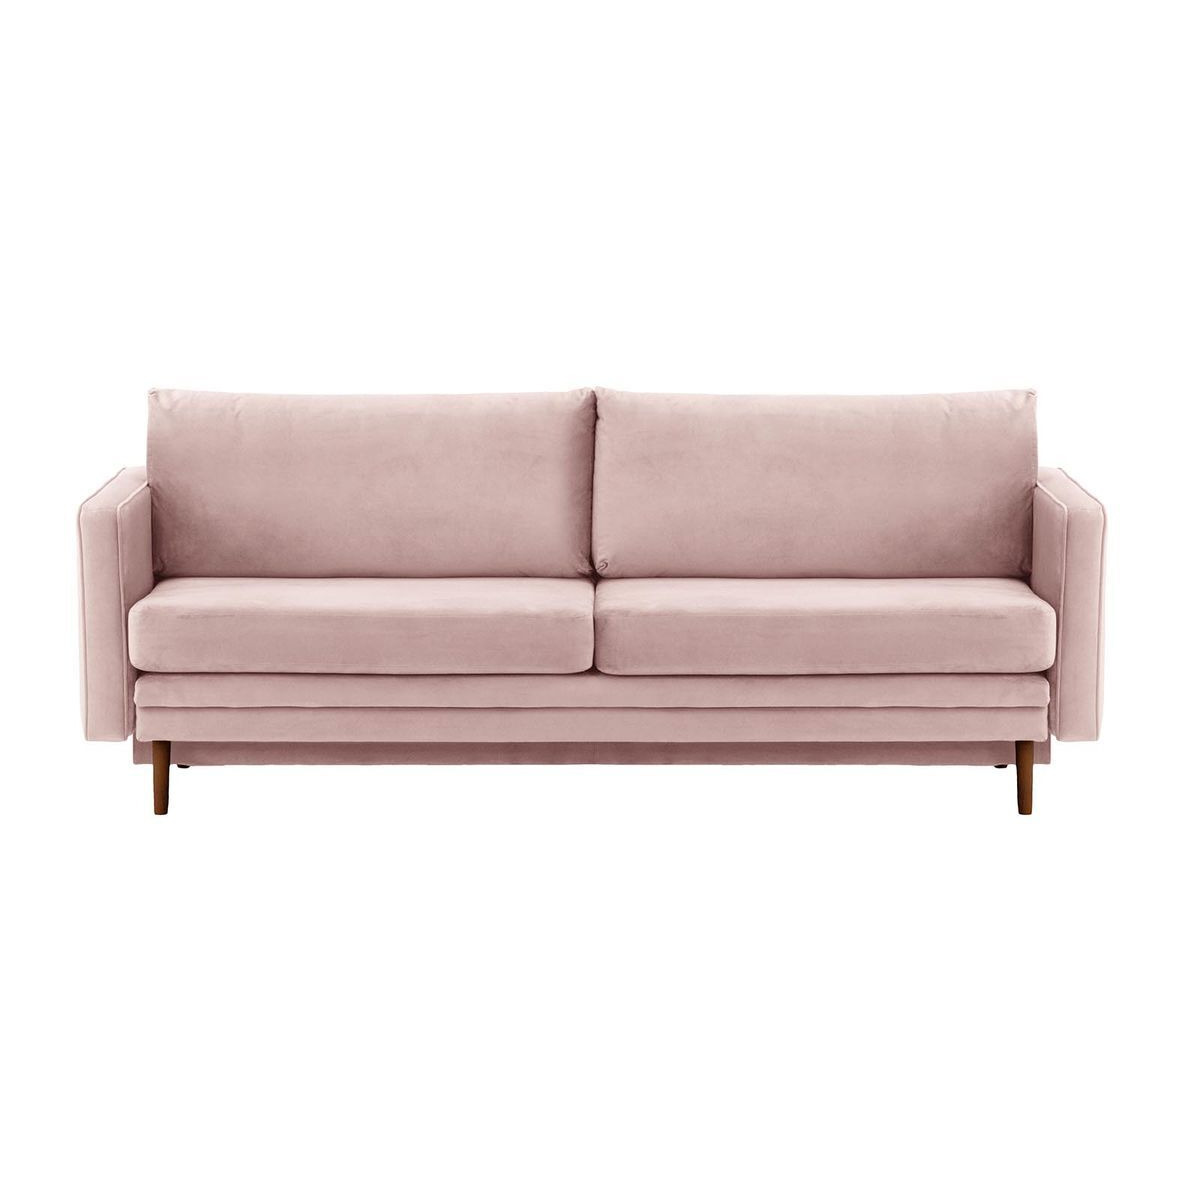 Lioni Sofa Bed with Storage, lilac, Leg colour: dark oak - image 1